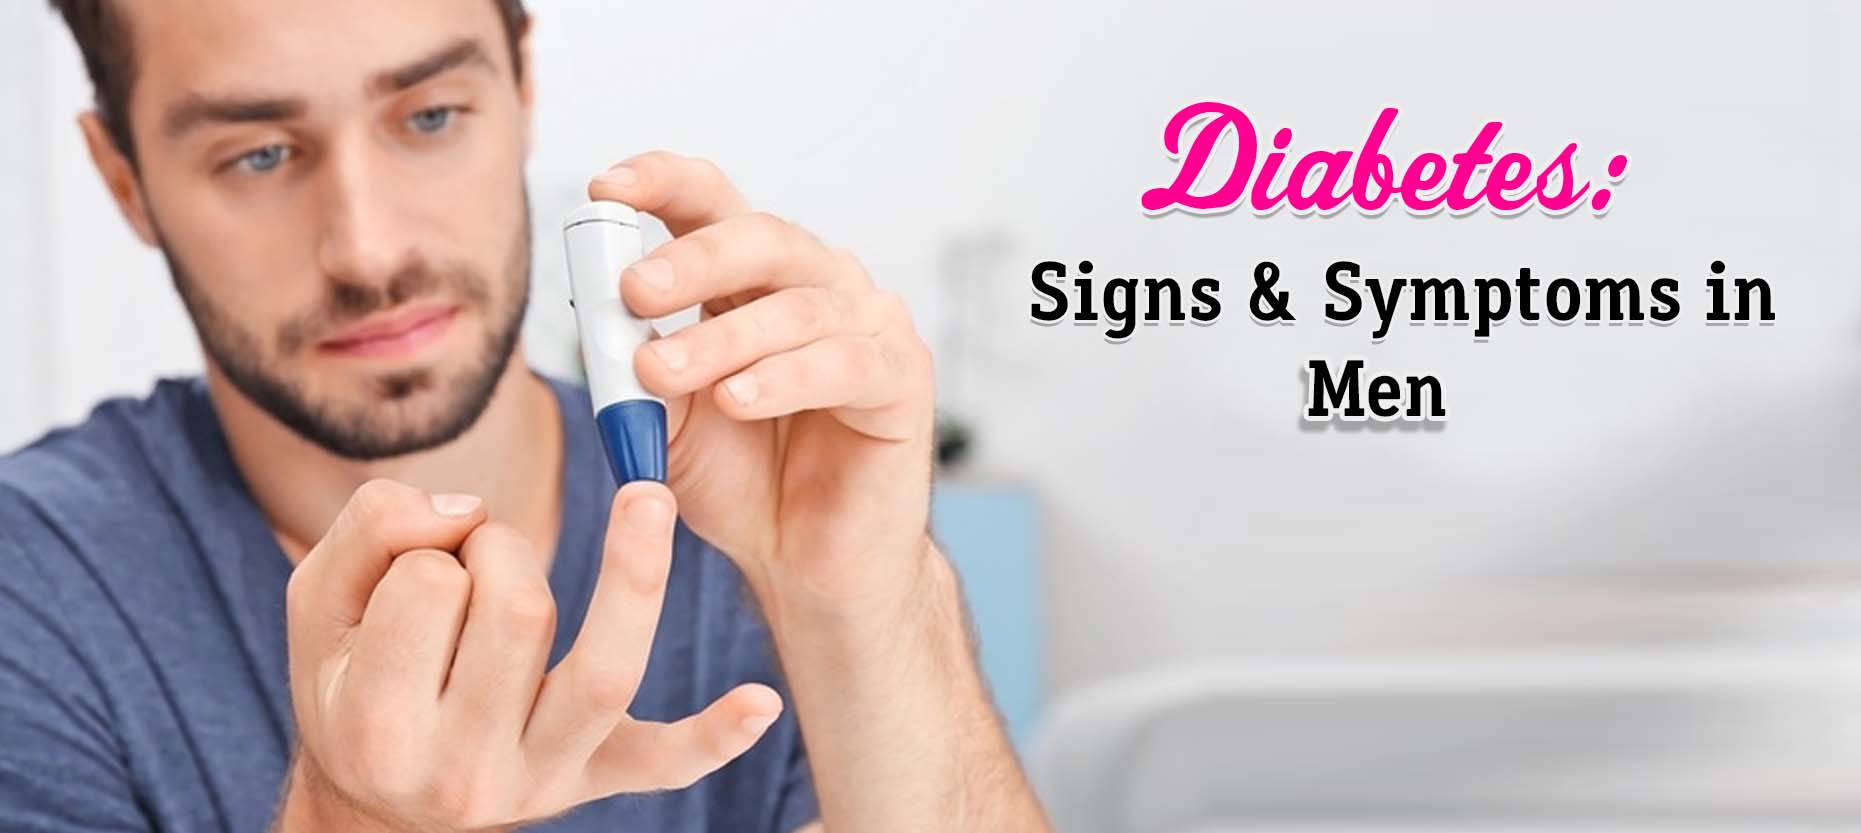 Diabetes: Signs & Symptoms in Men